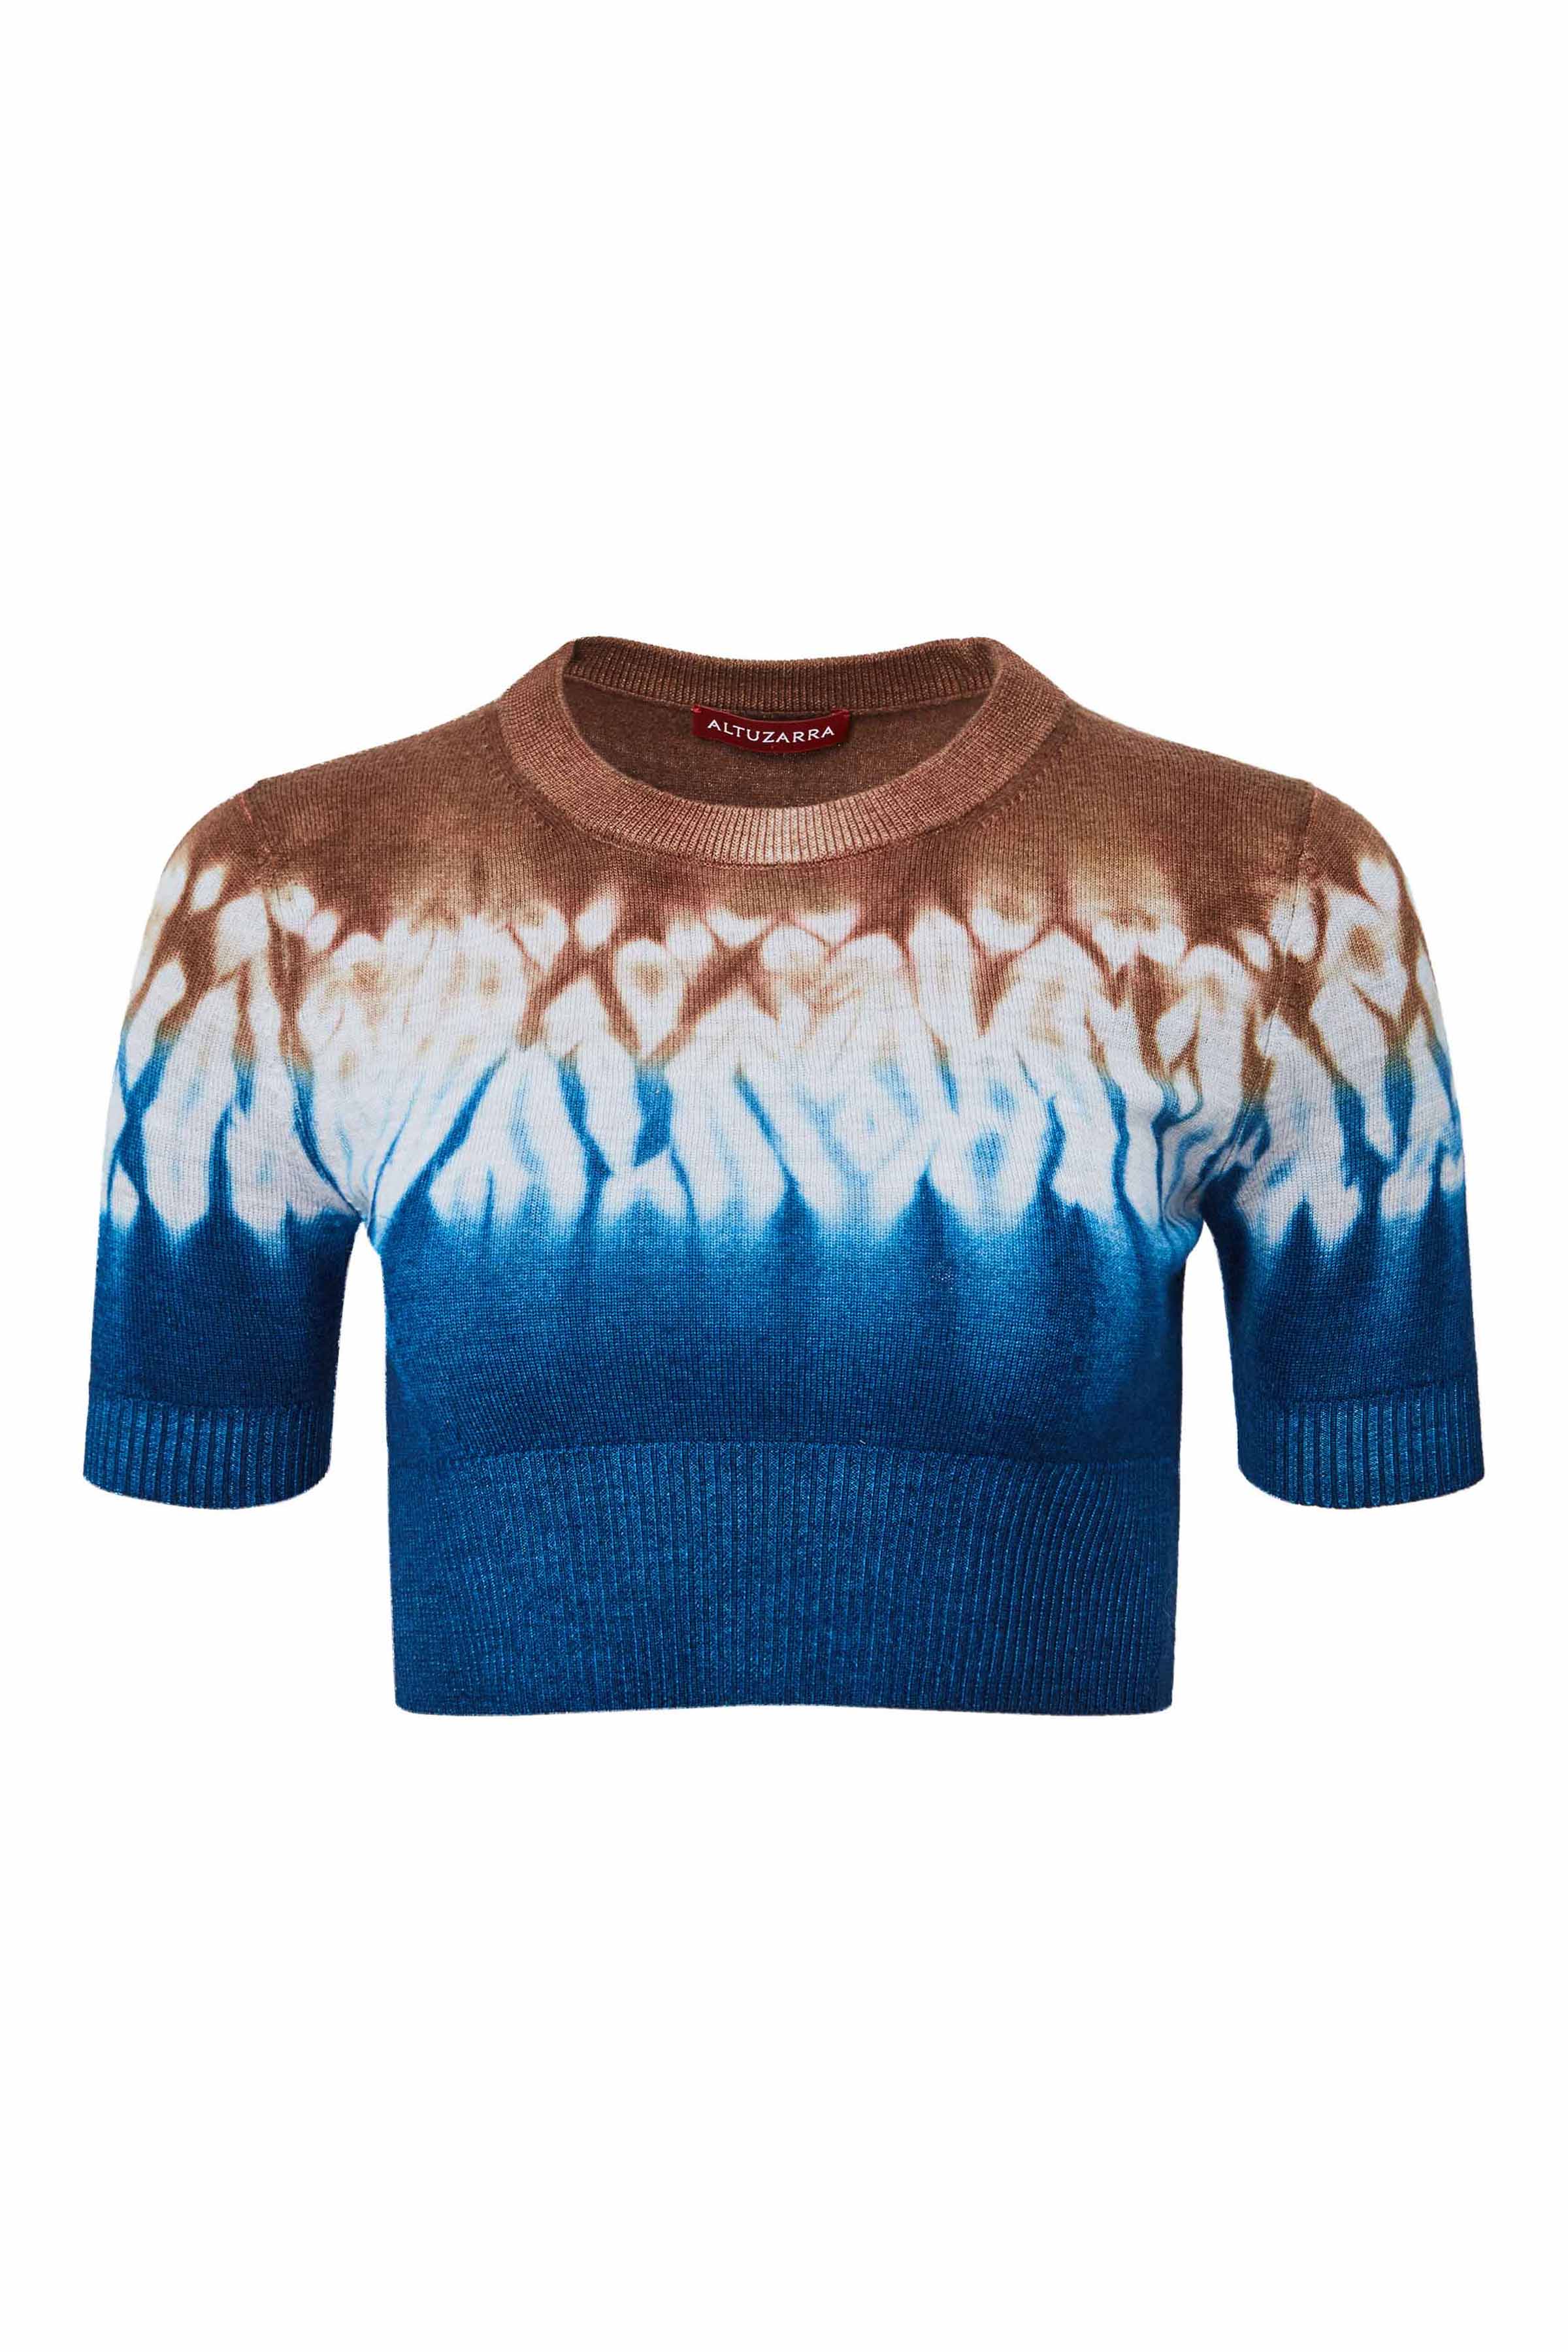 Nicholas' Sweater